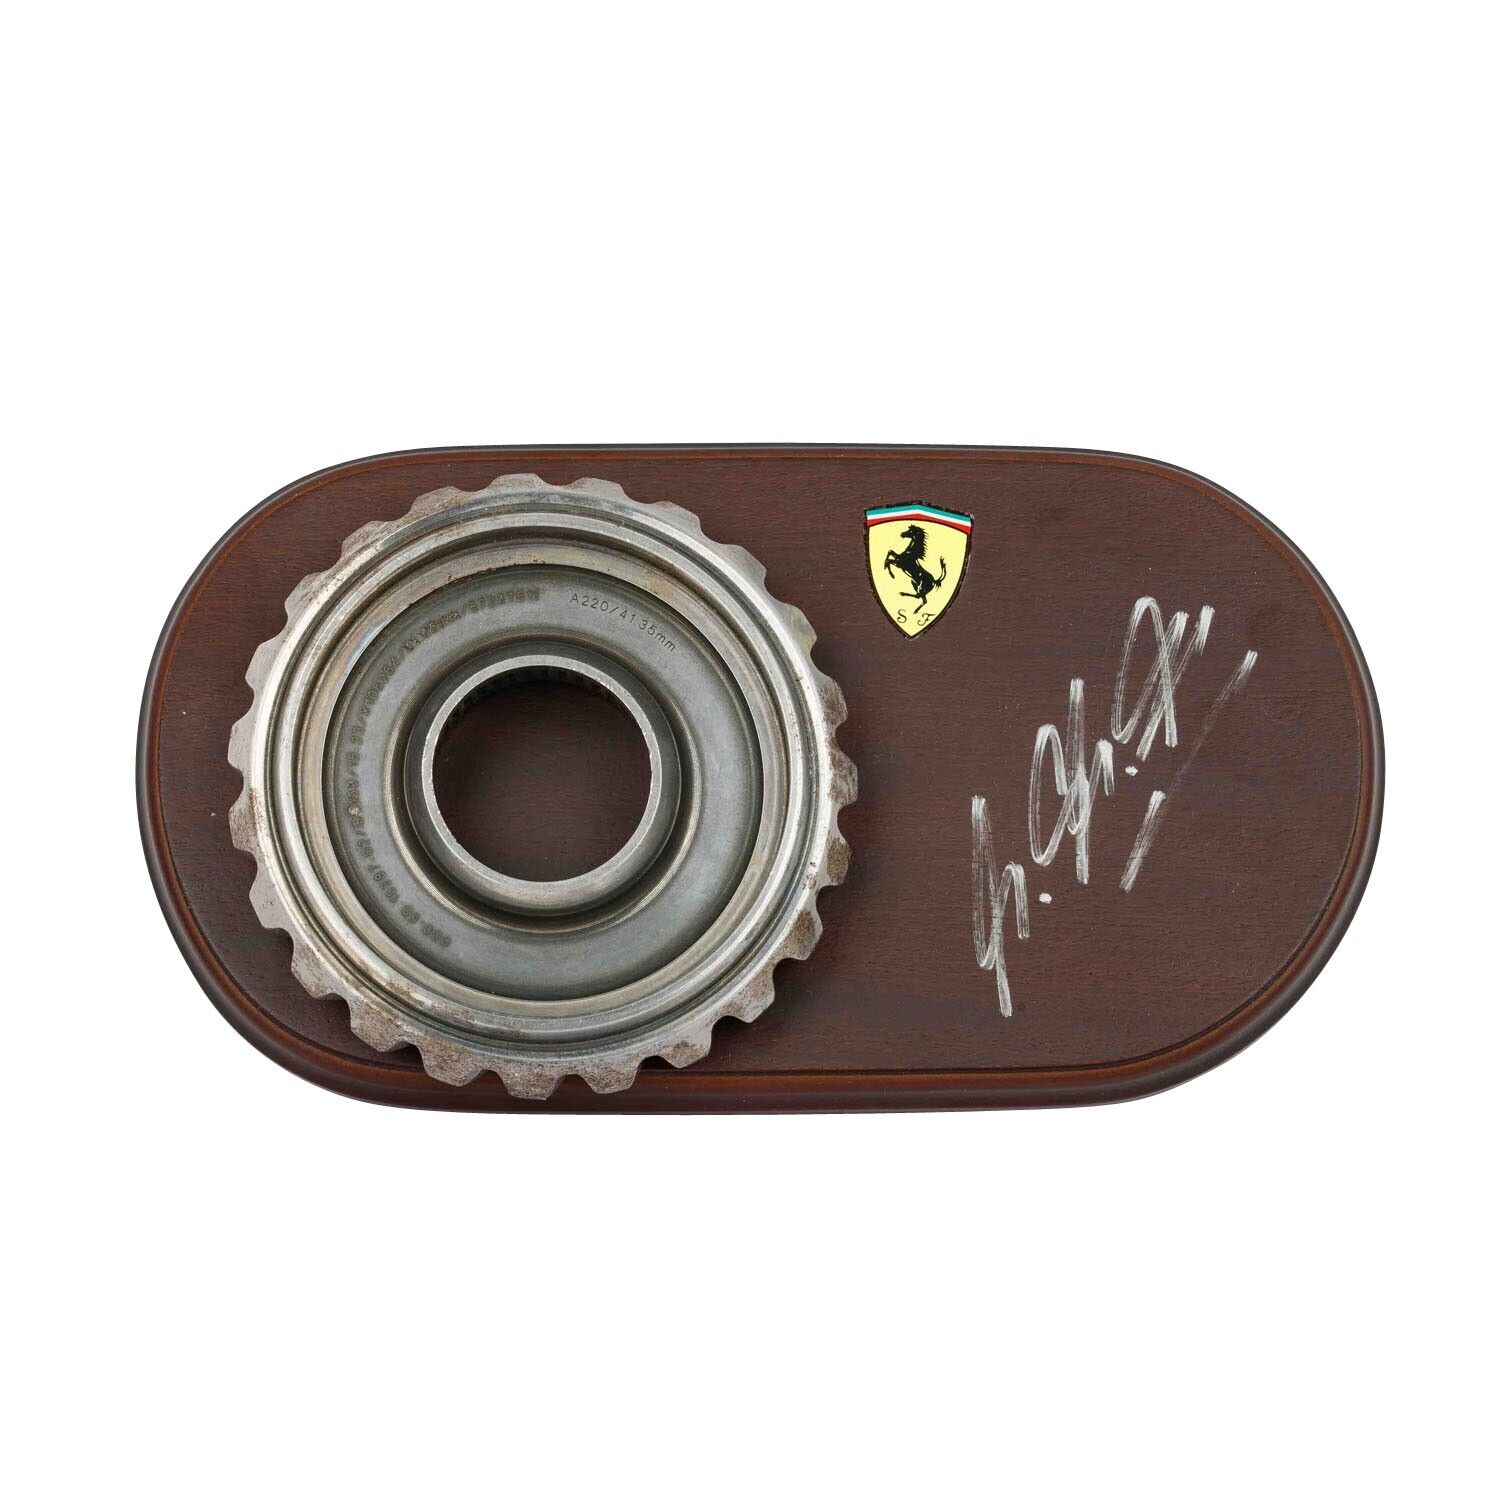 Exclusive Ferrari Differential Ring Gear with Michael Schumacher Signature